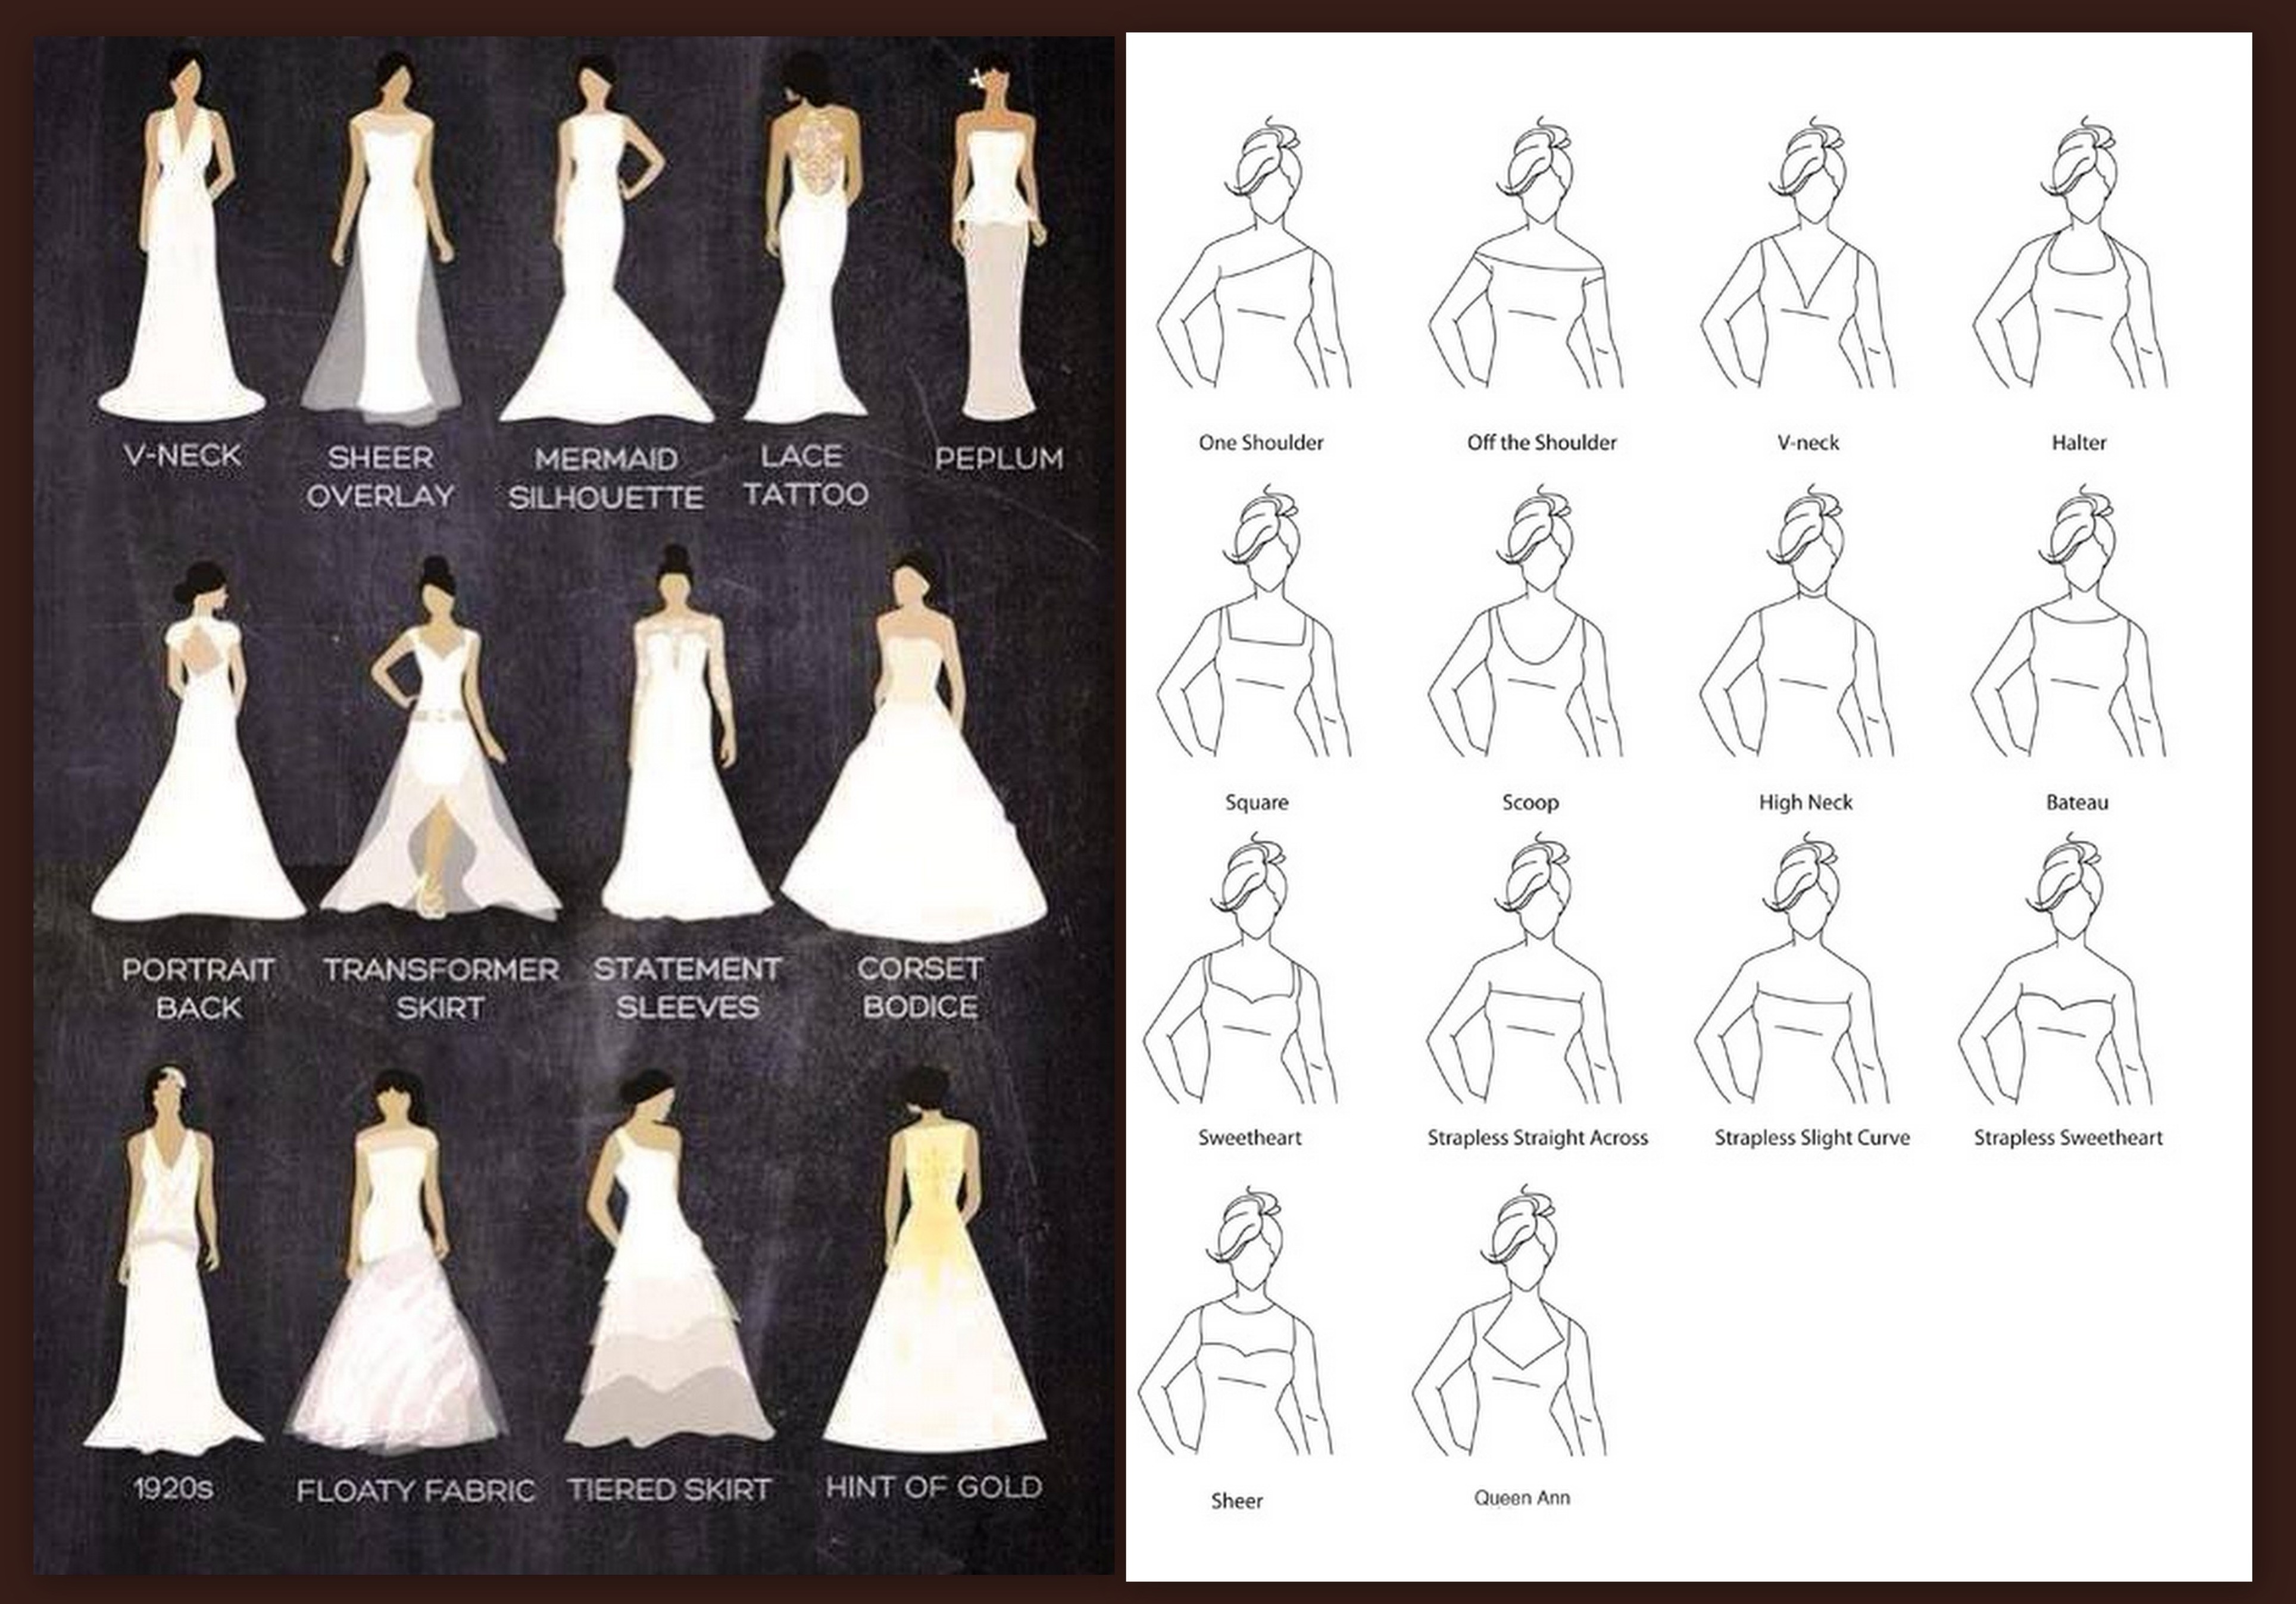 wedding dress styles chart,chart wedding dress types,dress styles chart,style types of wedding dresses,different wedding dress styles chart,neckline dress styles chart,